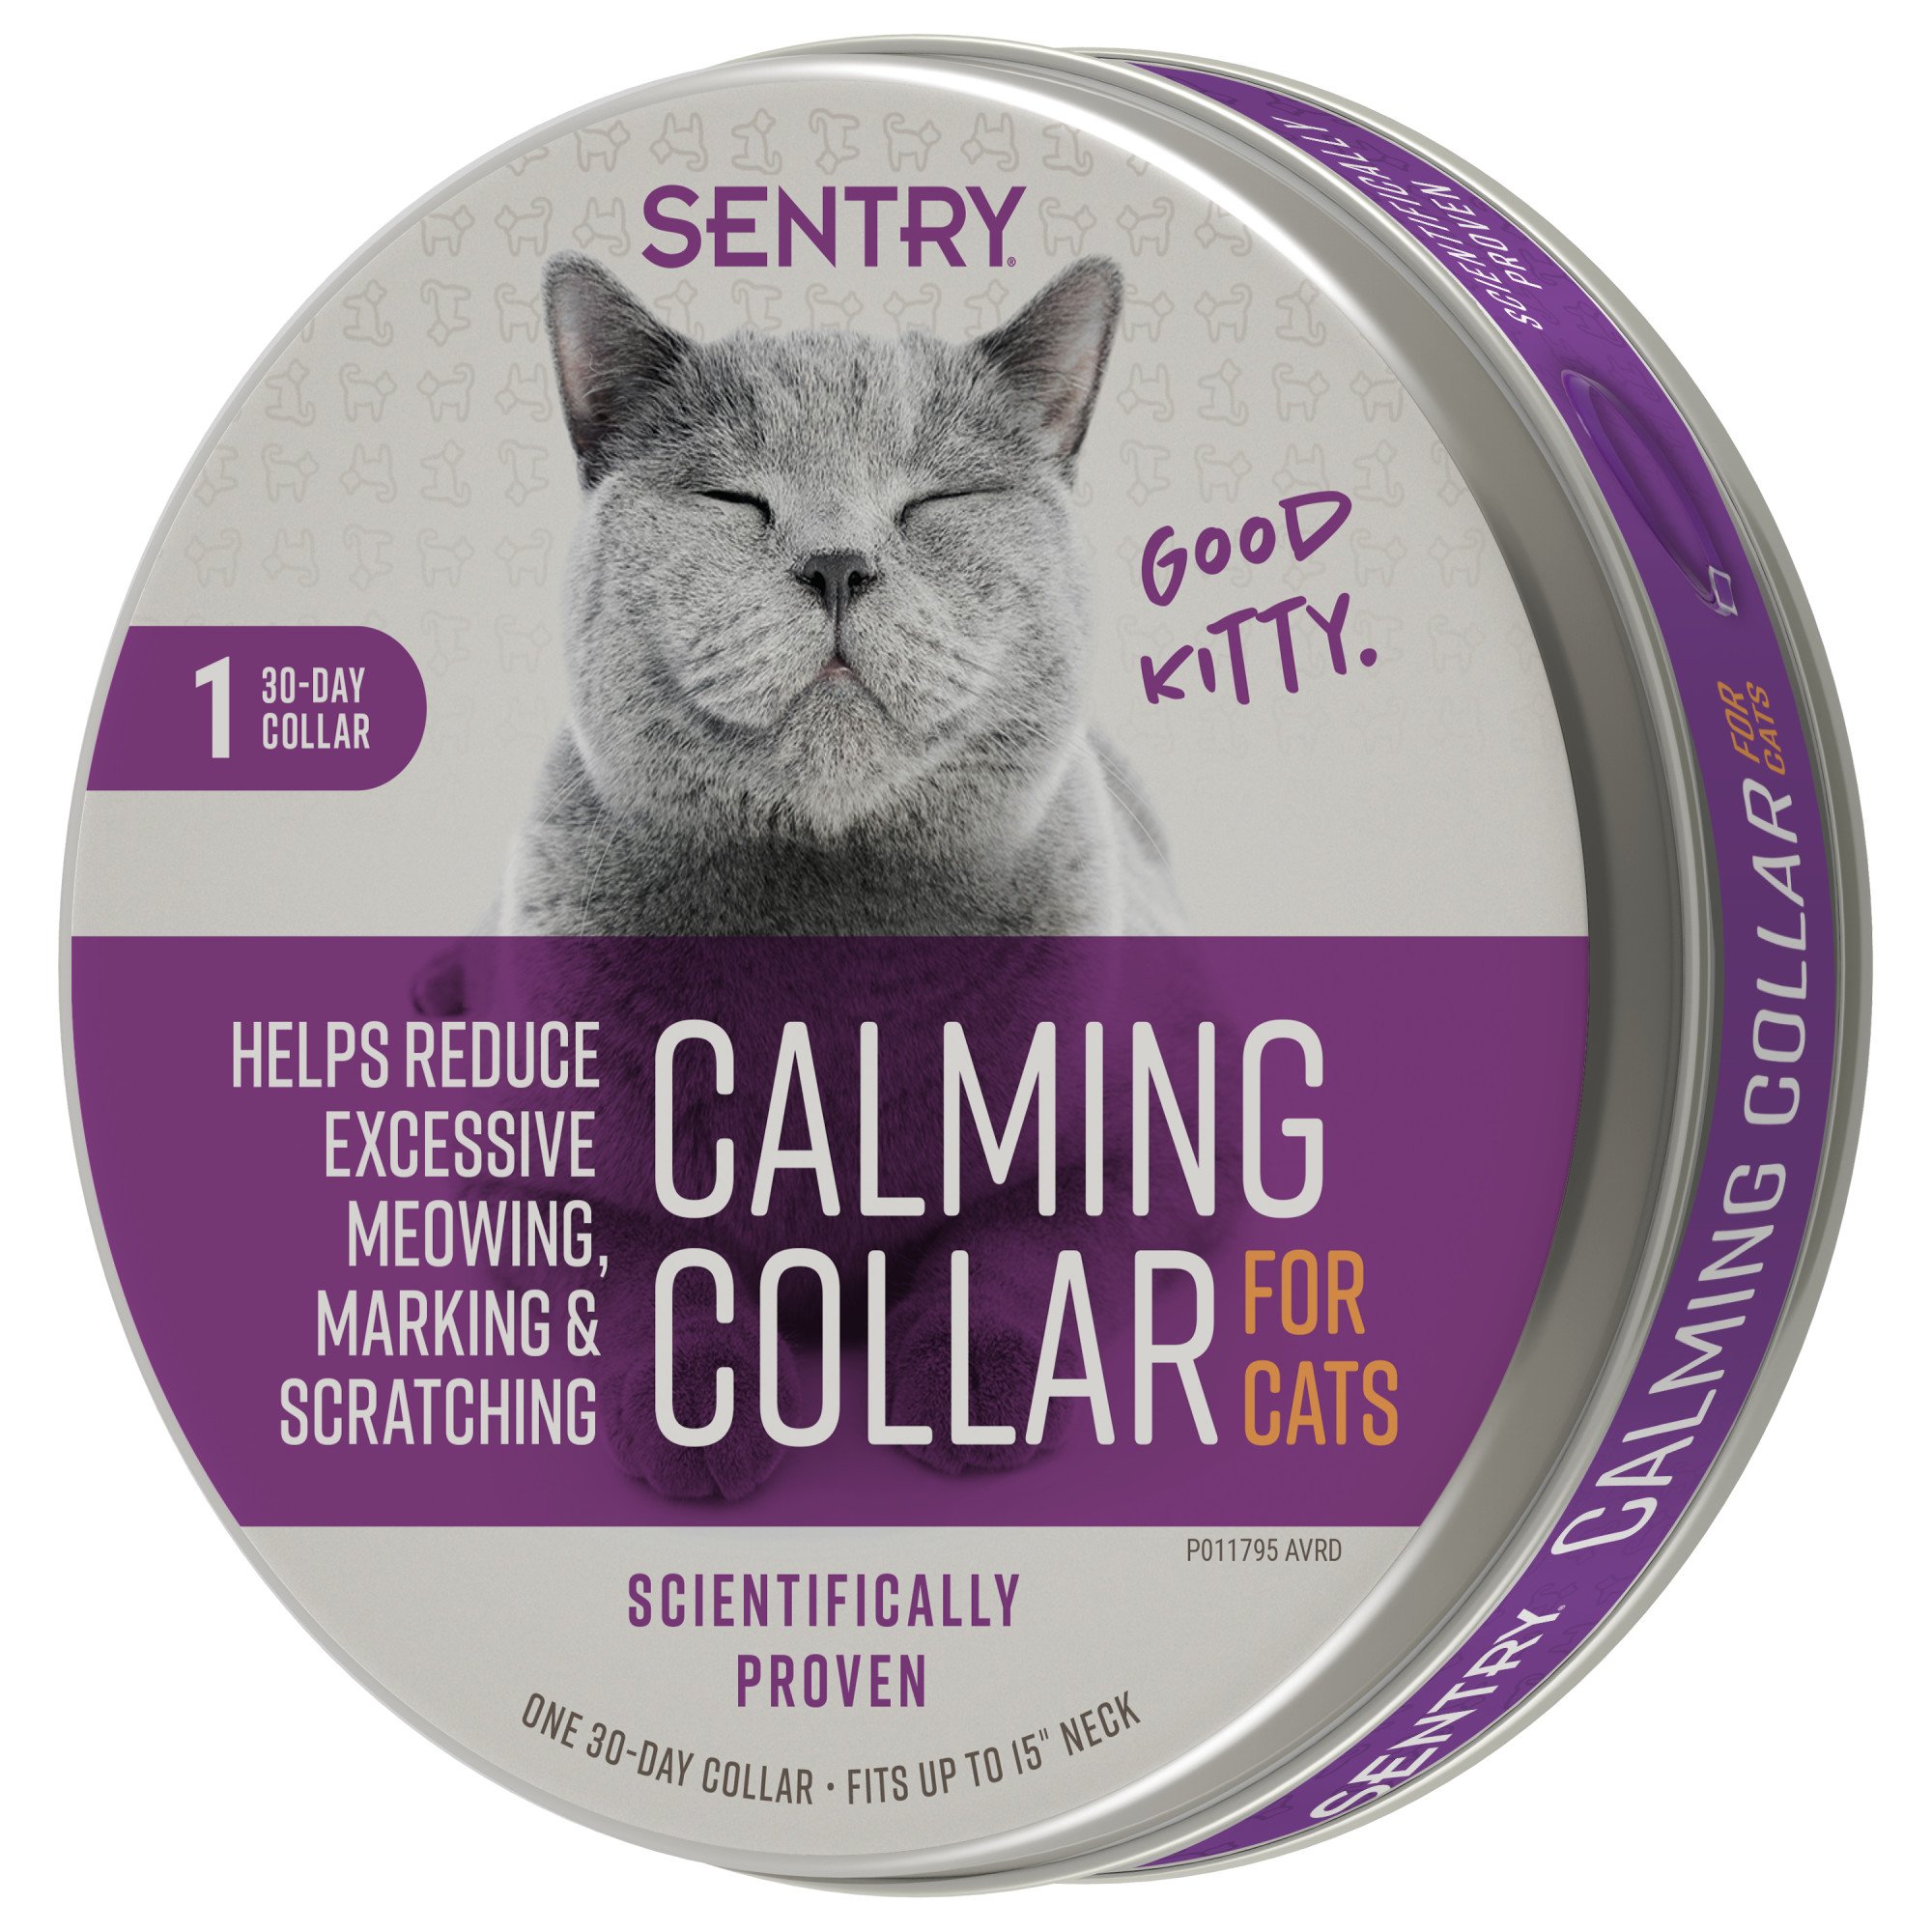 Sentry calming collars for cat